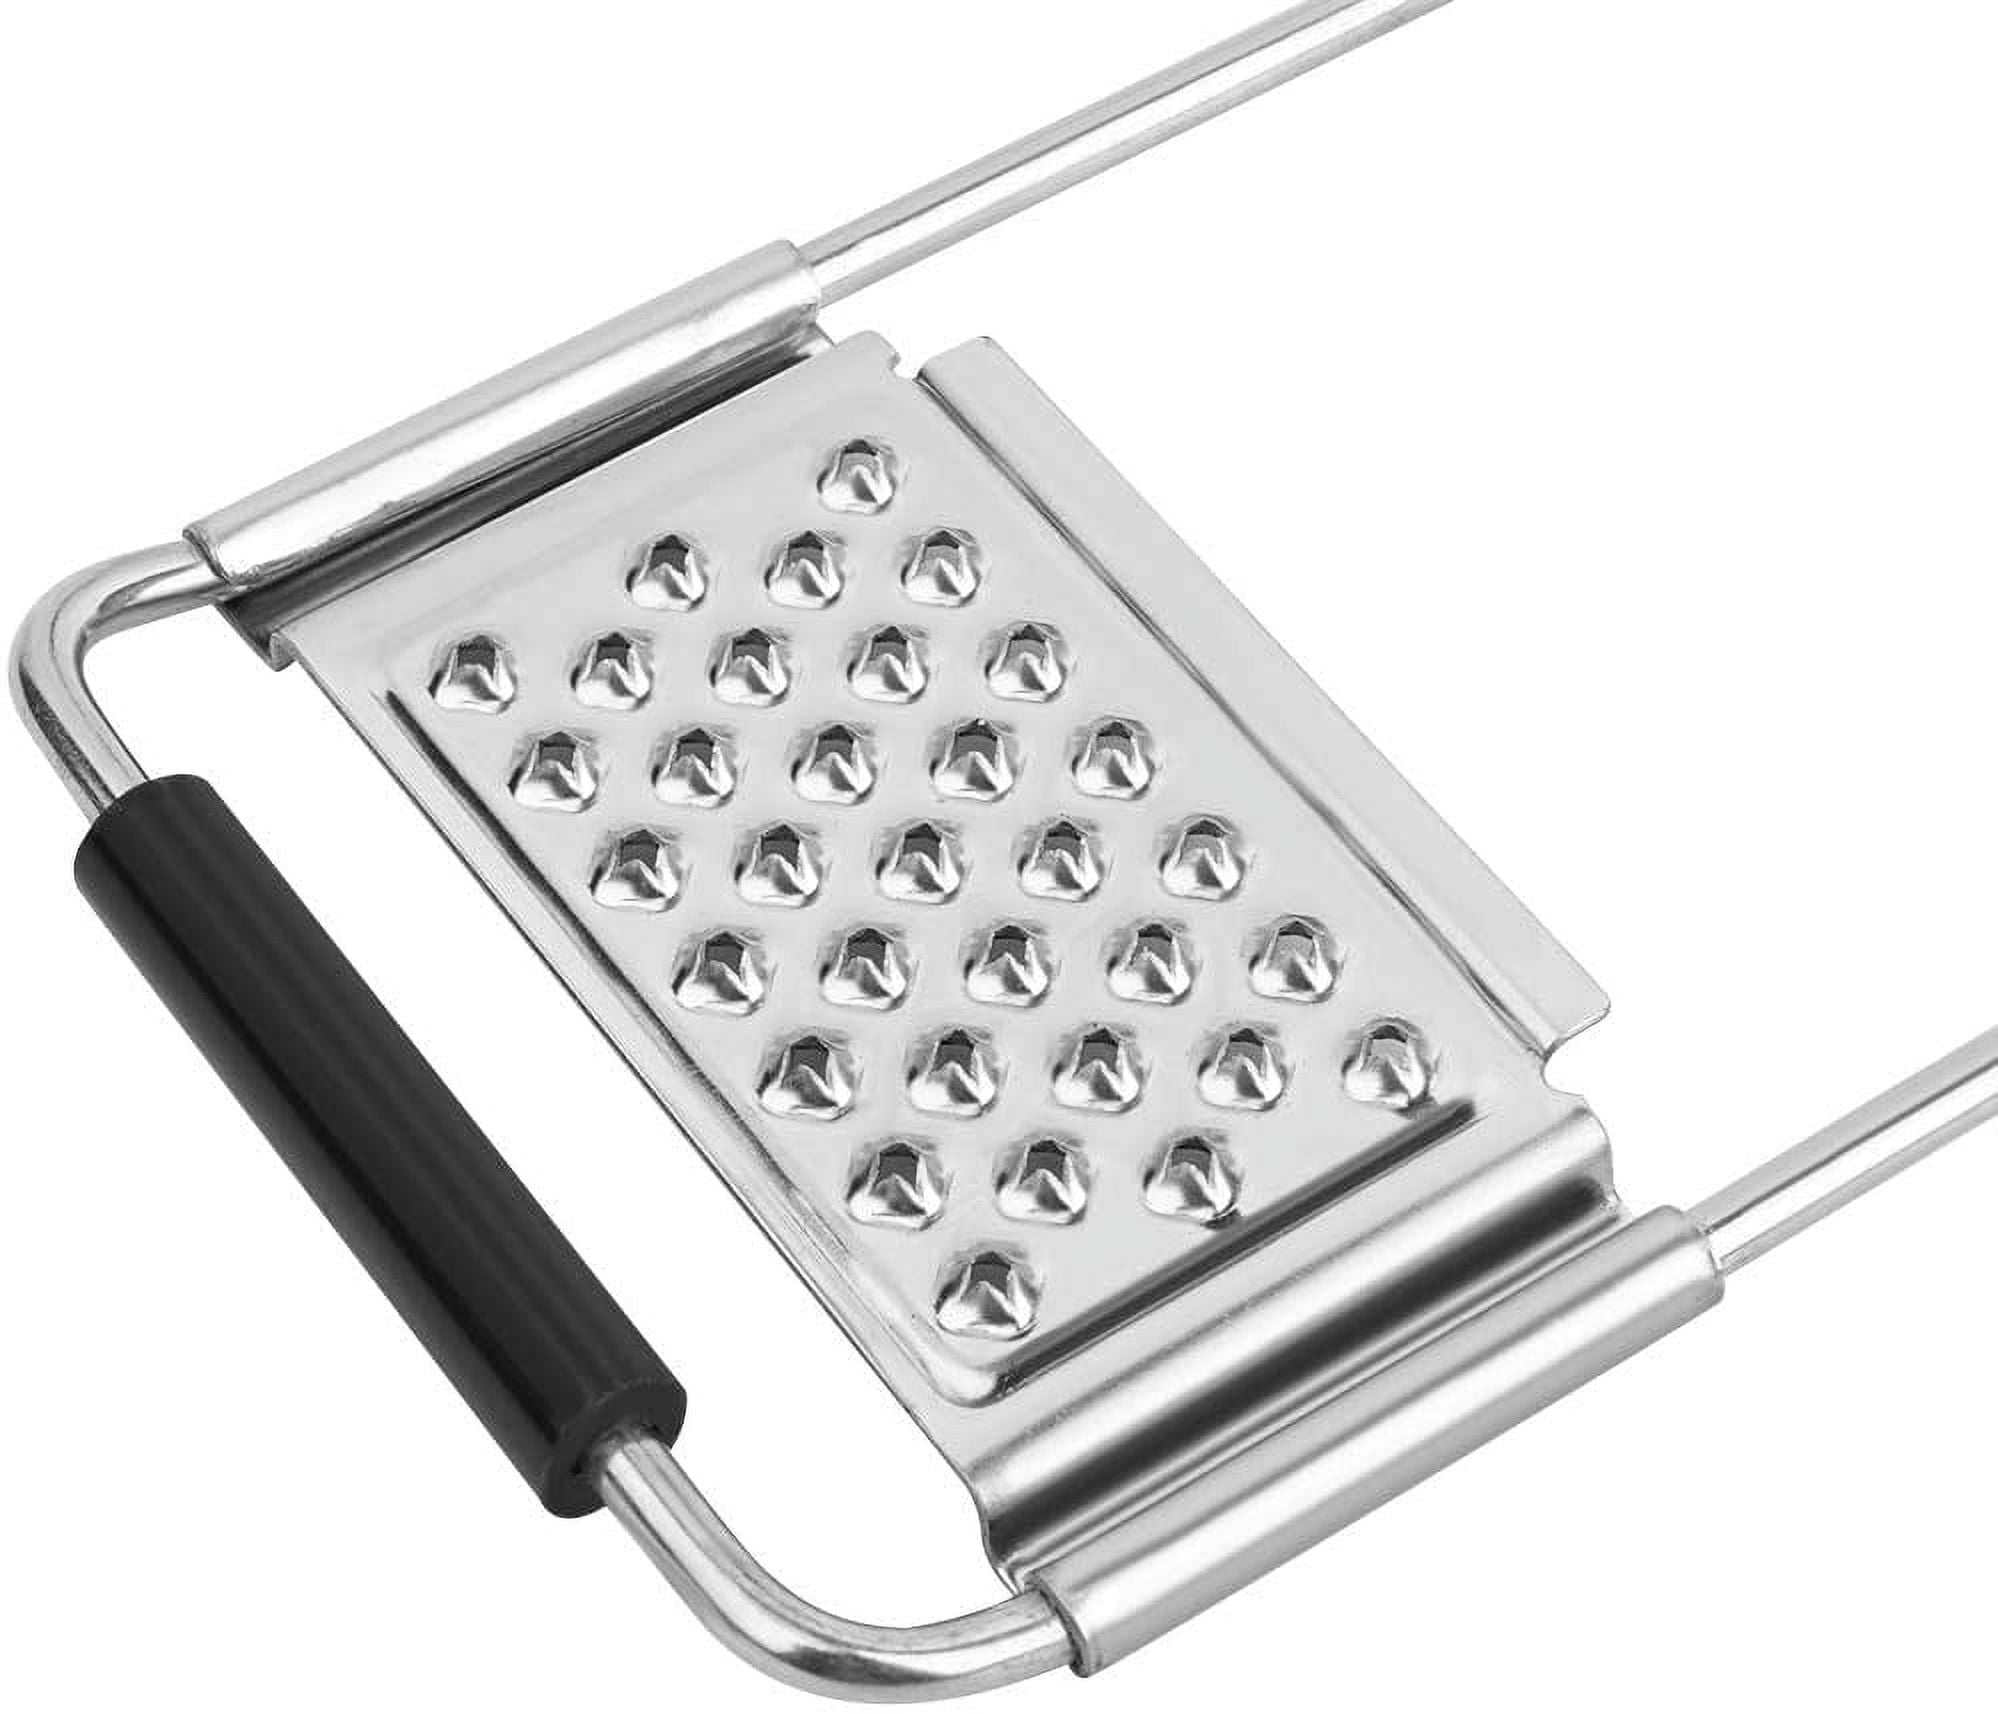 304 stainless steel multi-function grater household kitchen gadgets potato  radish slicer fruit and vegetable grater knife